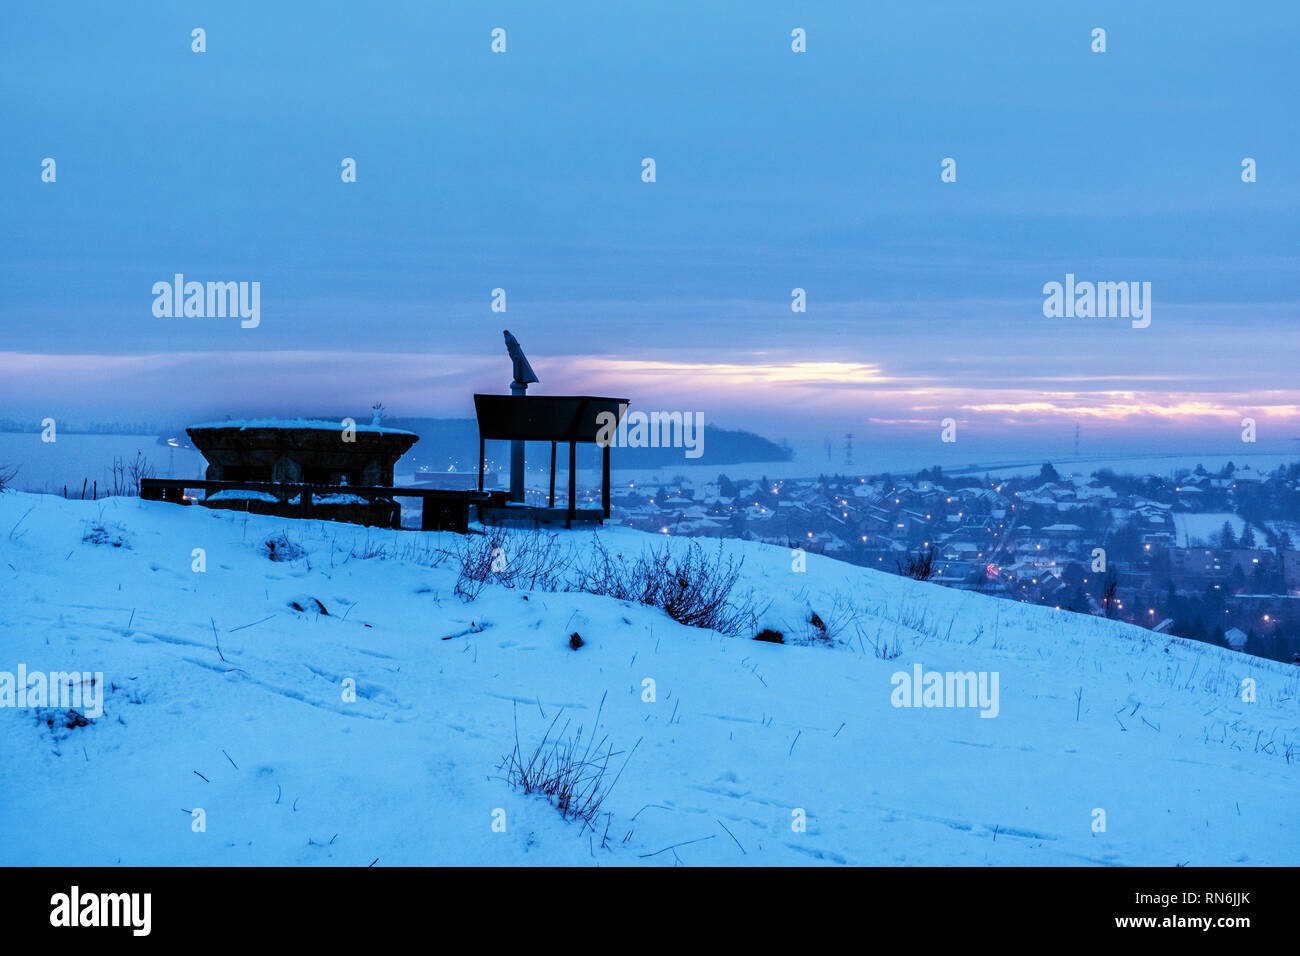 Sightseeing tourist telescope in Calvary, Nitra, Slovak republic. Travel destination. Night winter scene. Stock Photo